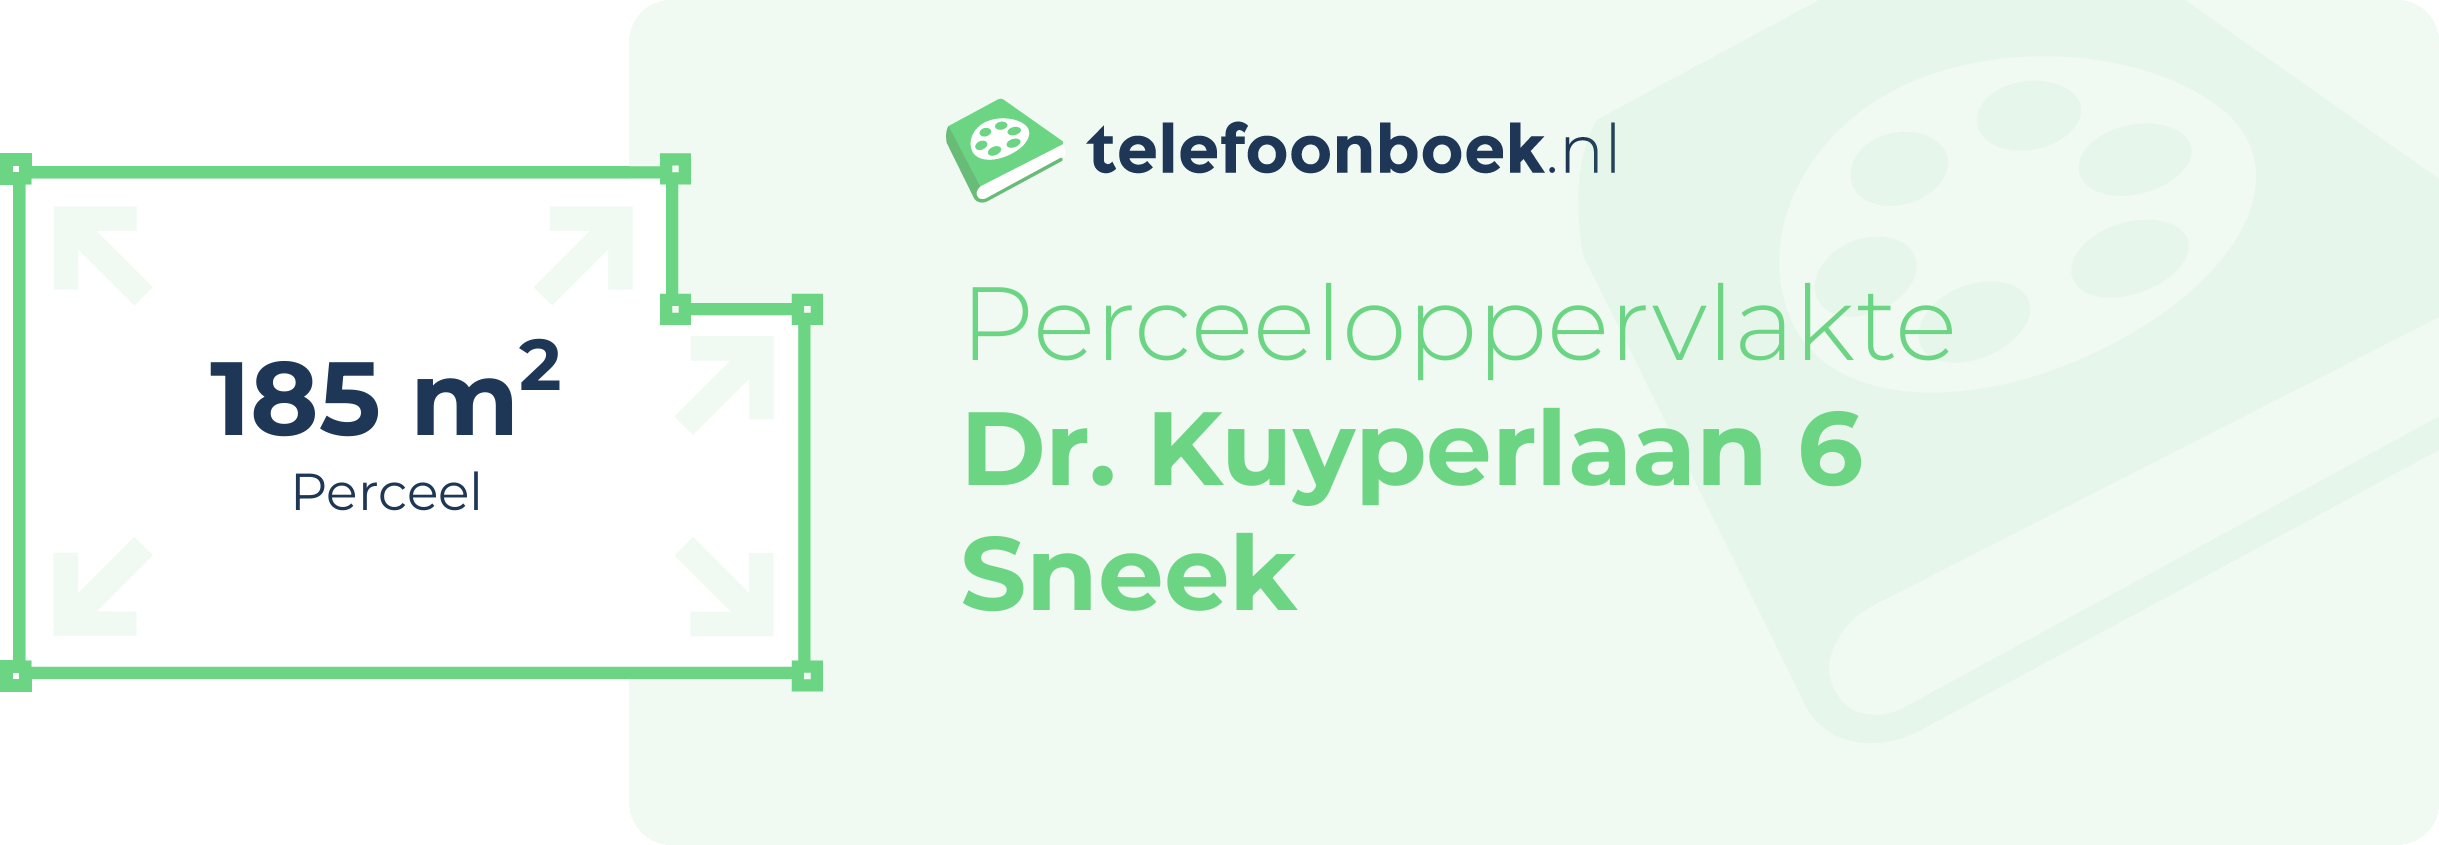 Perceeloppervlakte Dr. Kuyperlaan 6 Sneek